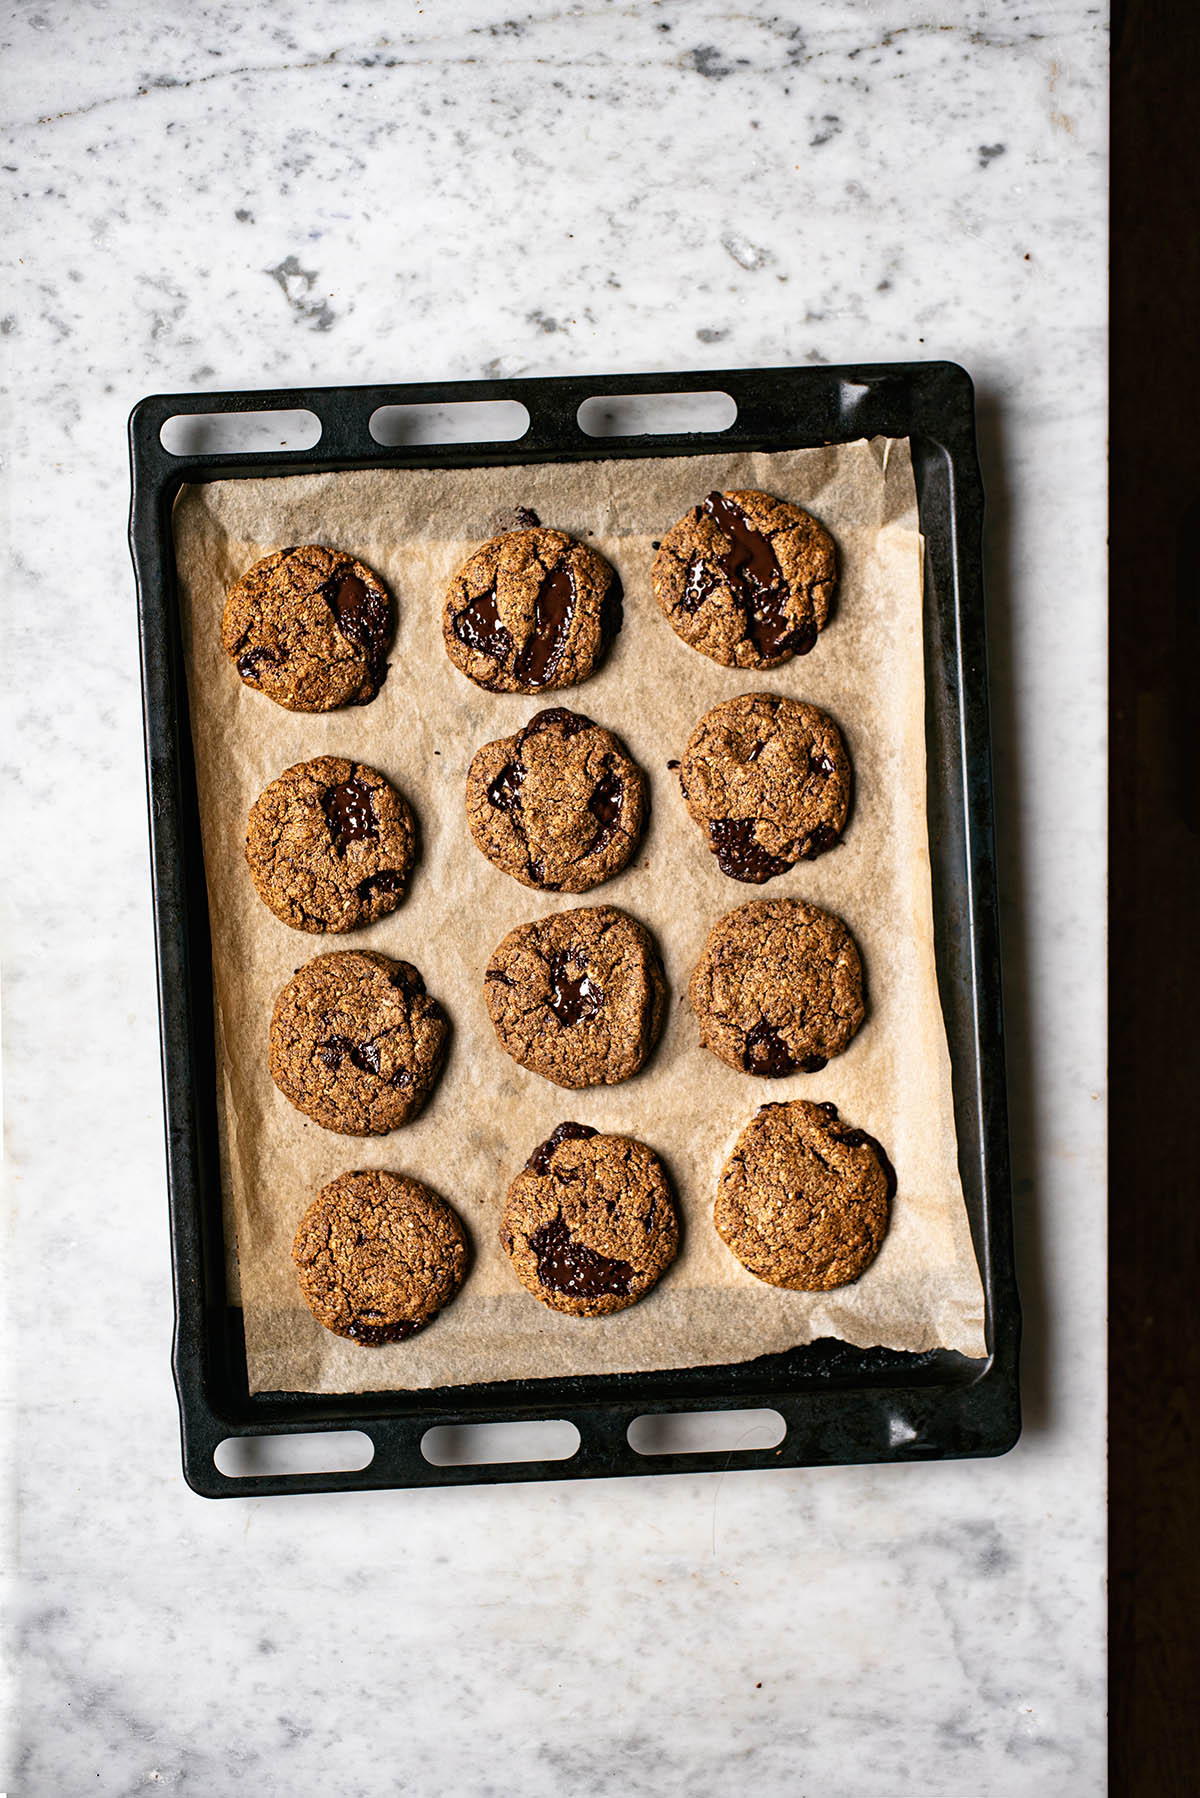 A baking sheet of chocolate chunk cookies.